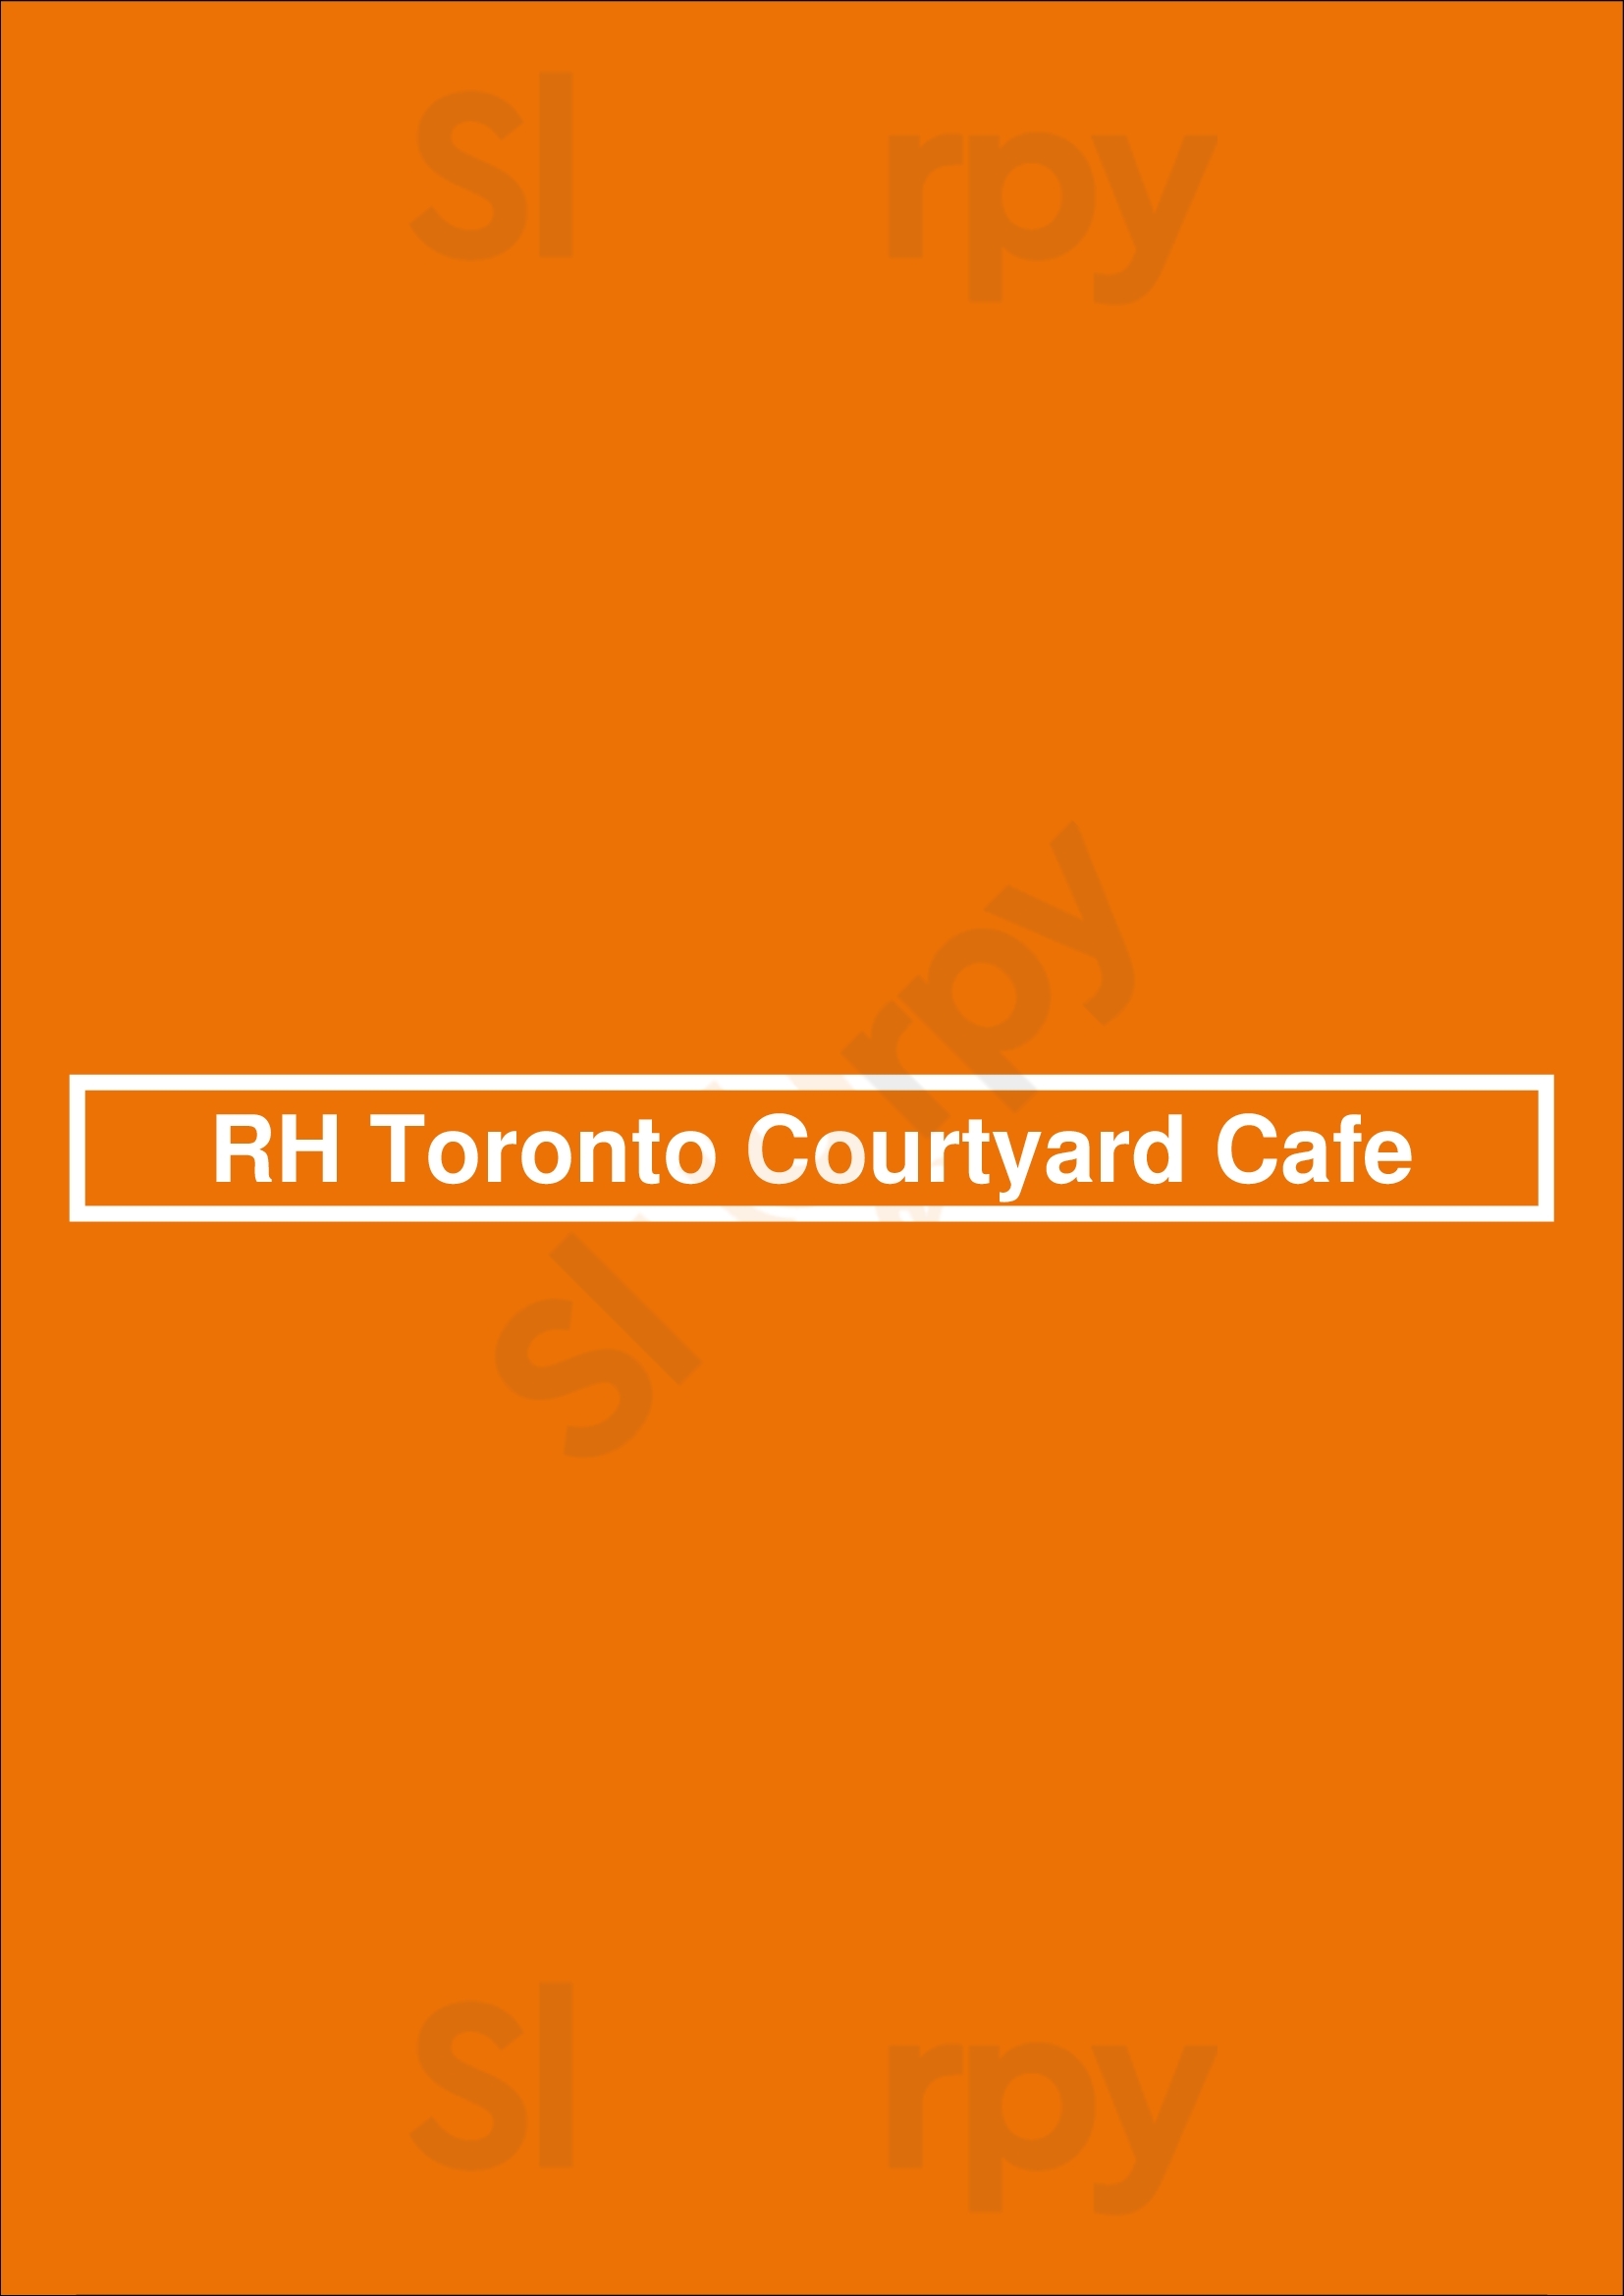 Rh Courtyard Restaurant At Rh Toronto Toronto Menu - 1